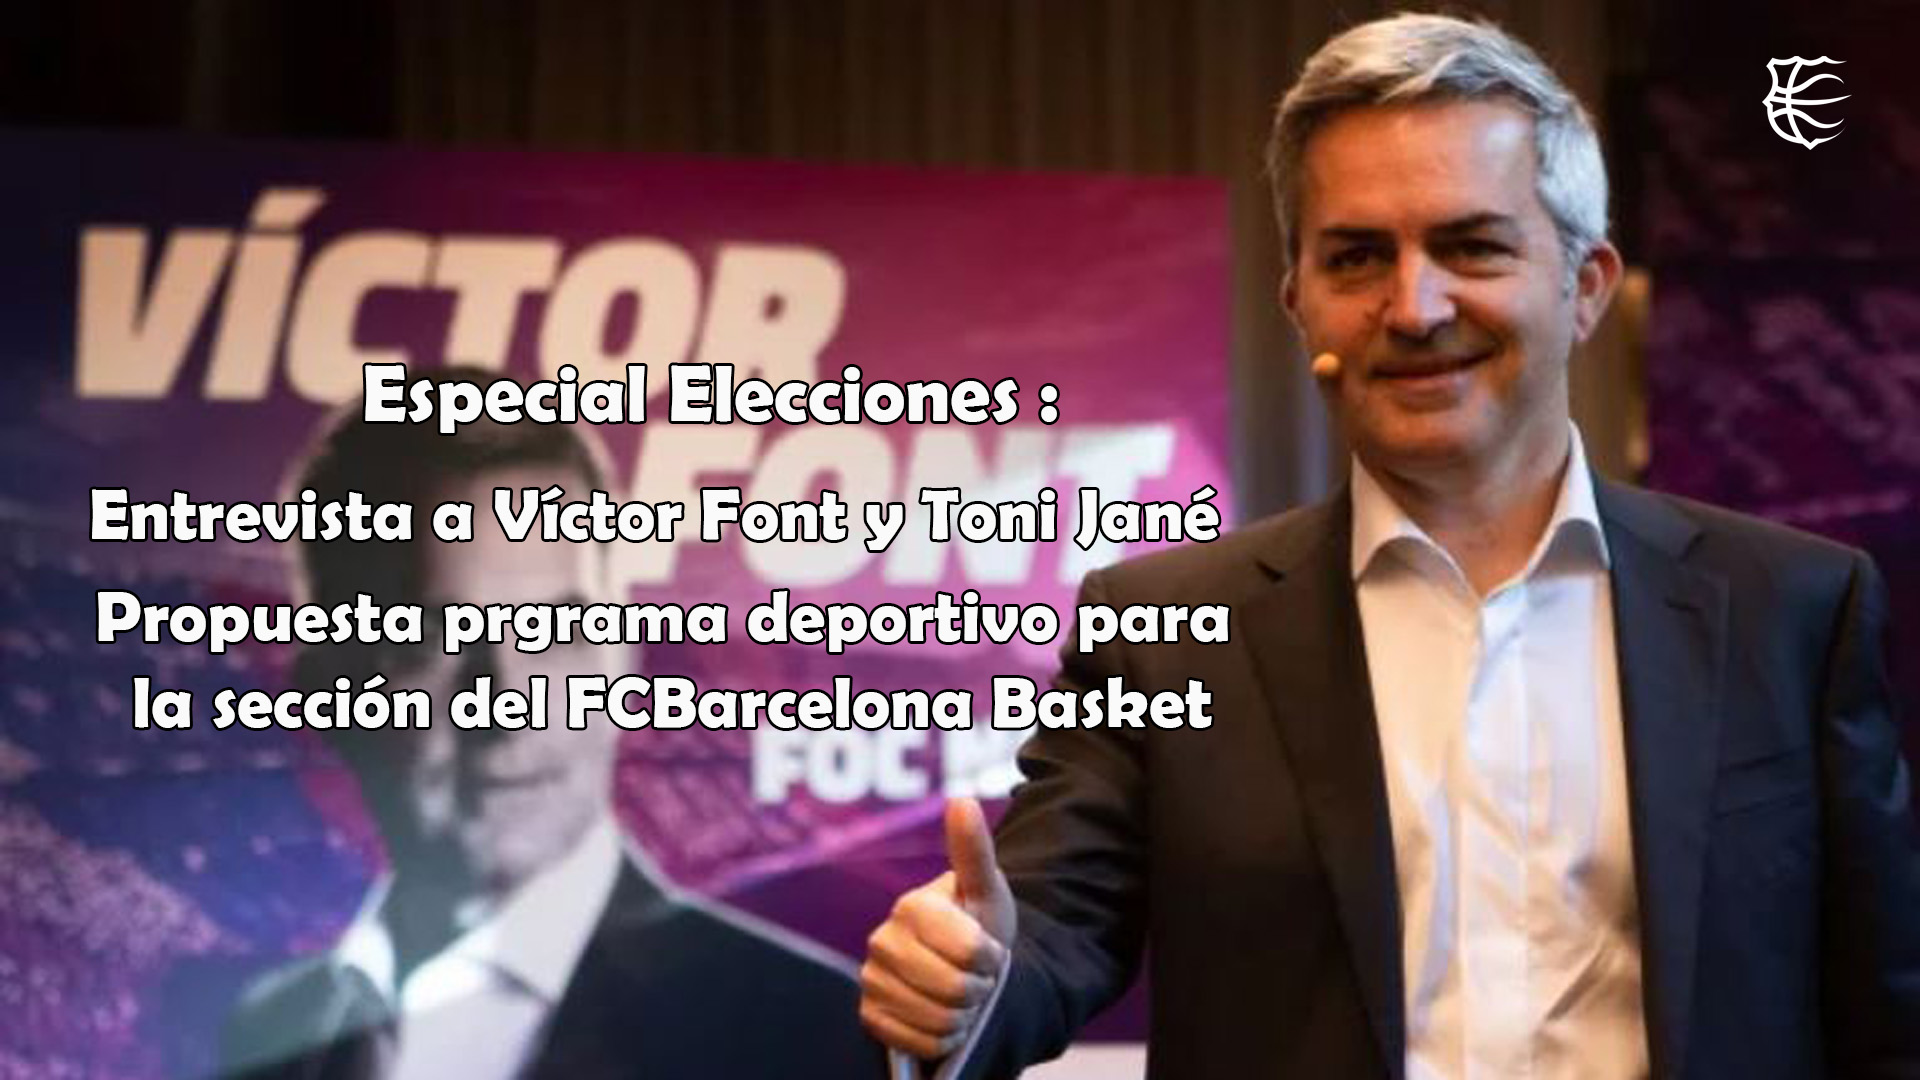 Podcast Especial Elecciones con Vctor Font